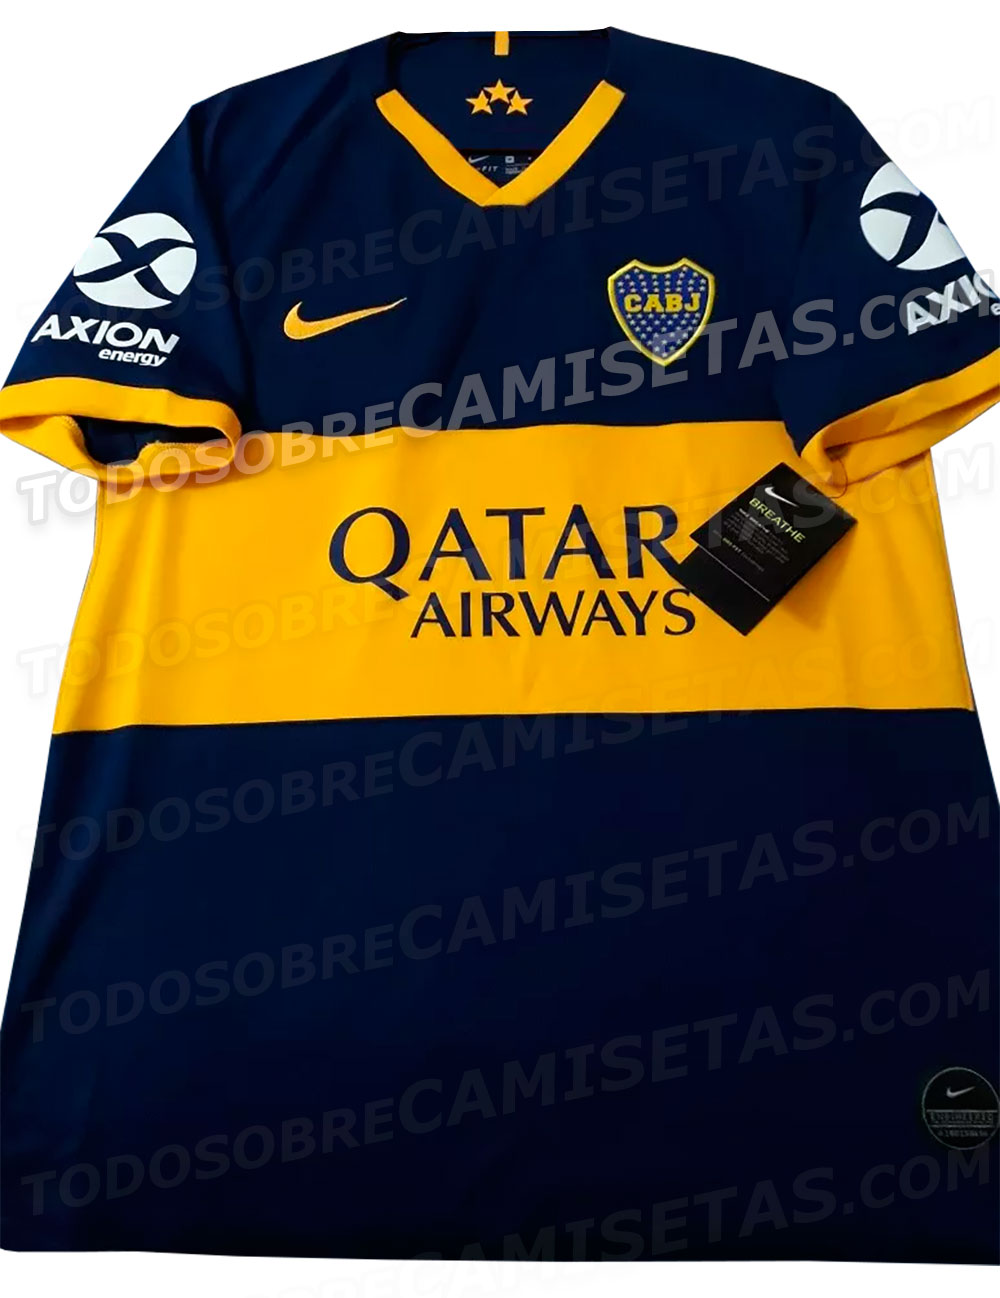 weight ideology melted Camiseta Nike de Boca Juniors 2019-20 - Todo Sobre Camisetas